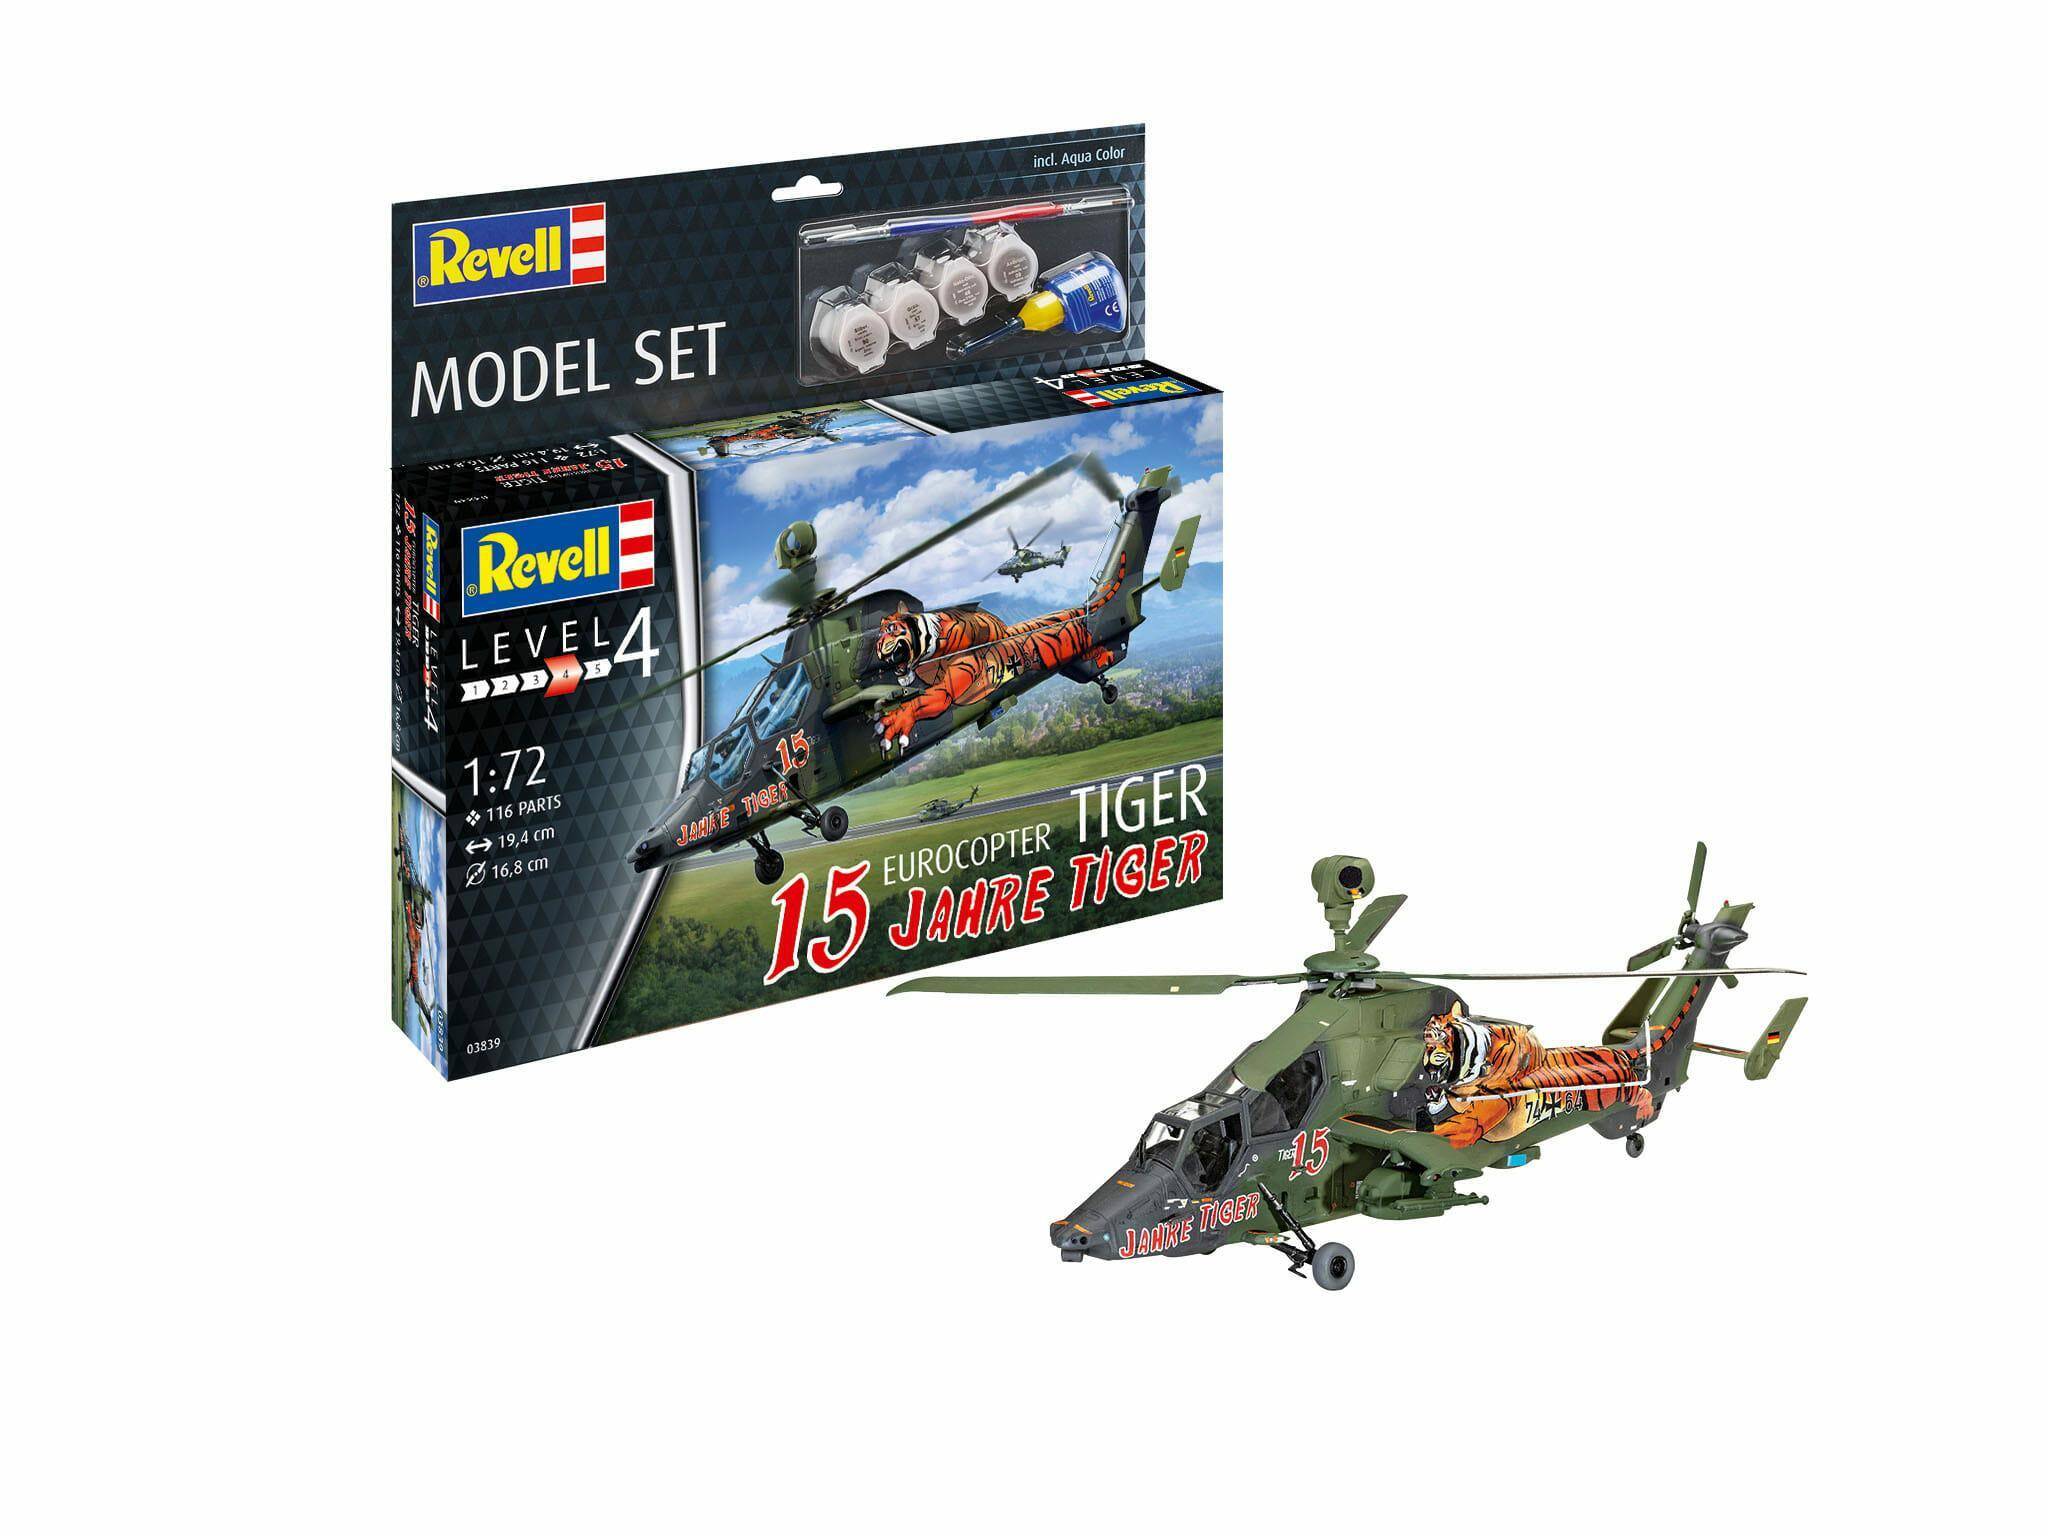 Model Revell 1:72 Eurocopter Tiger 15